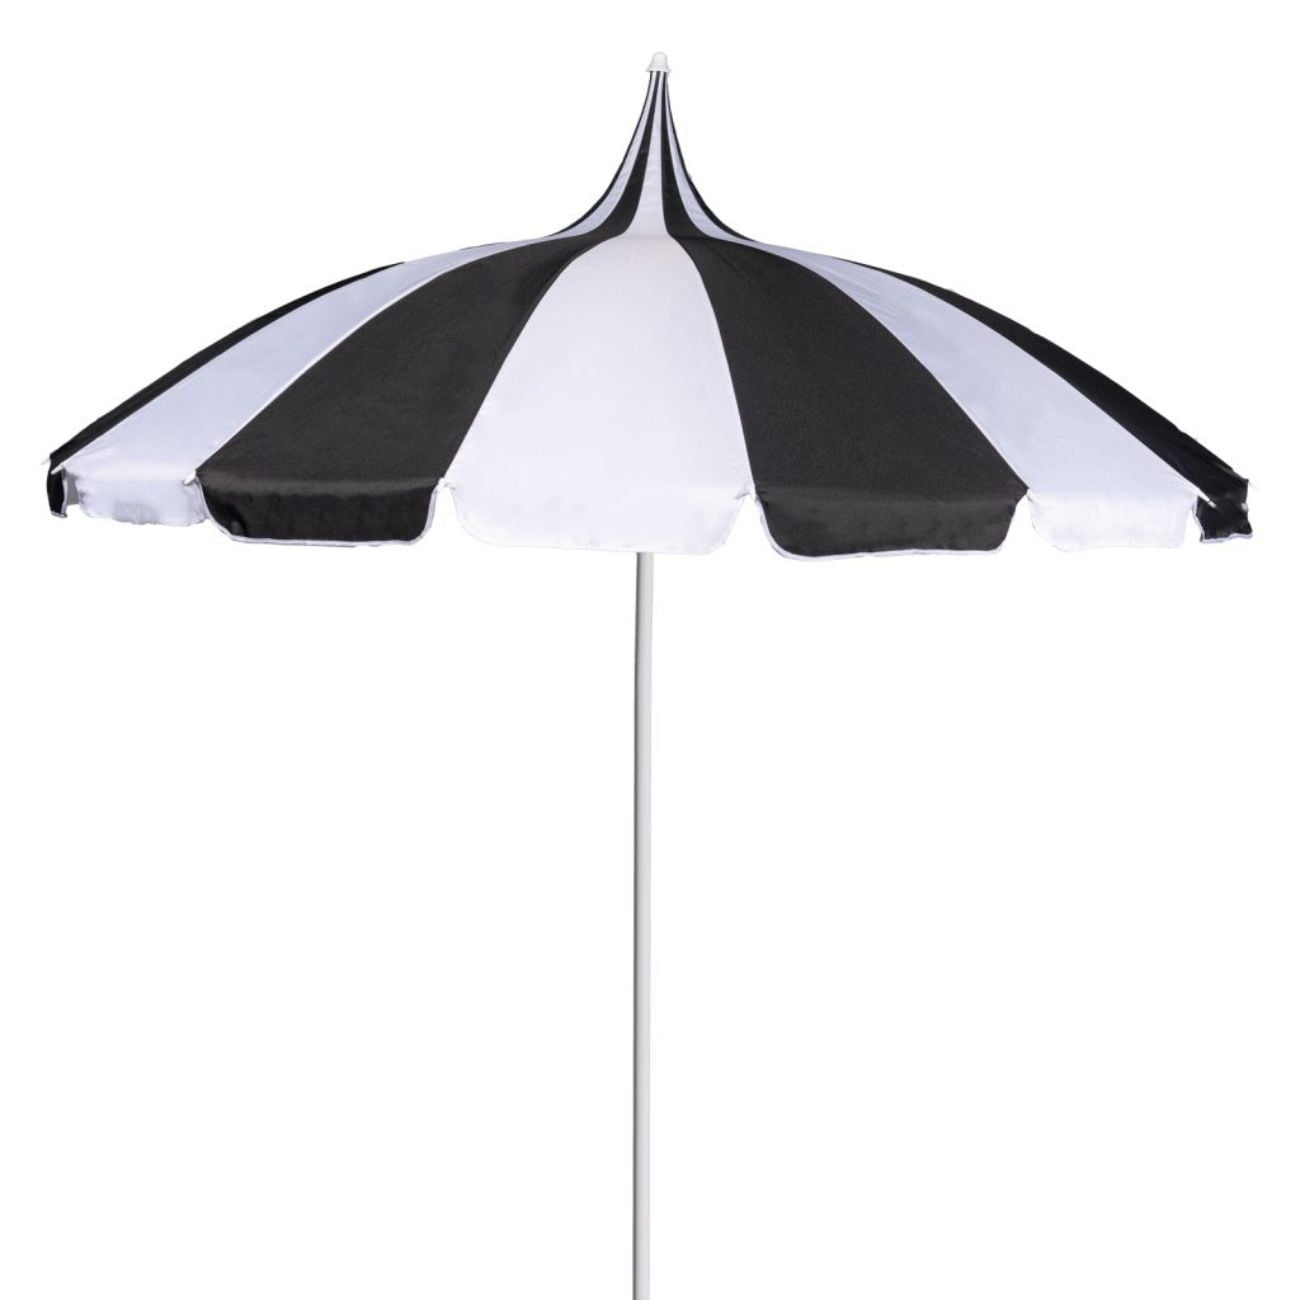 Stunning Classic Plain Pagoda Style Long Stick Umbrellas by Soake 